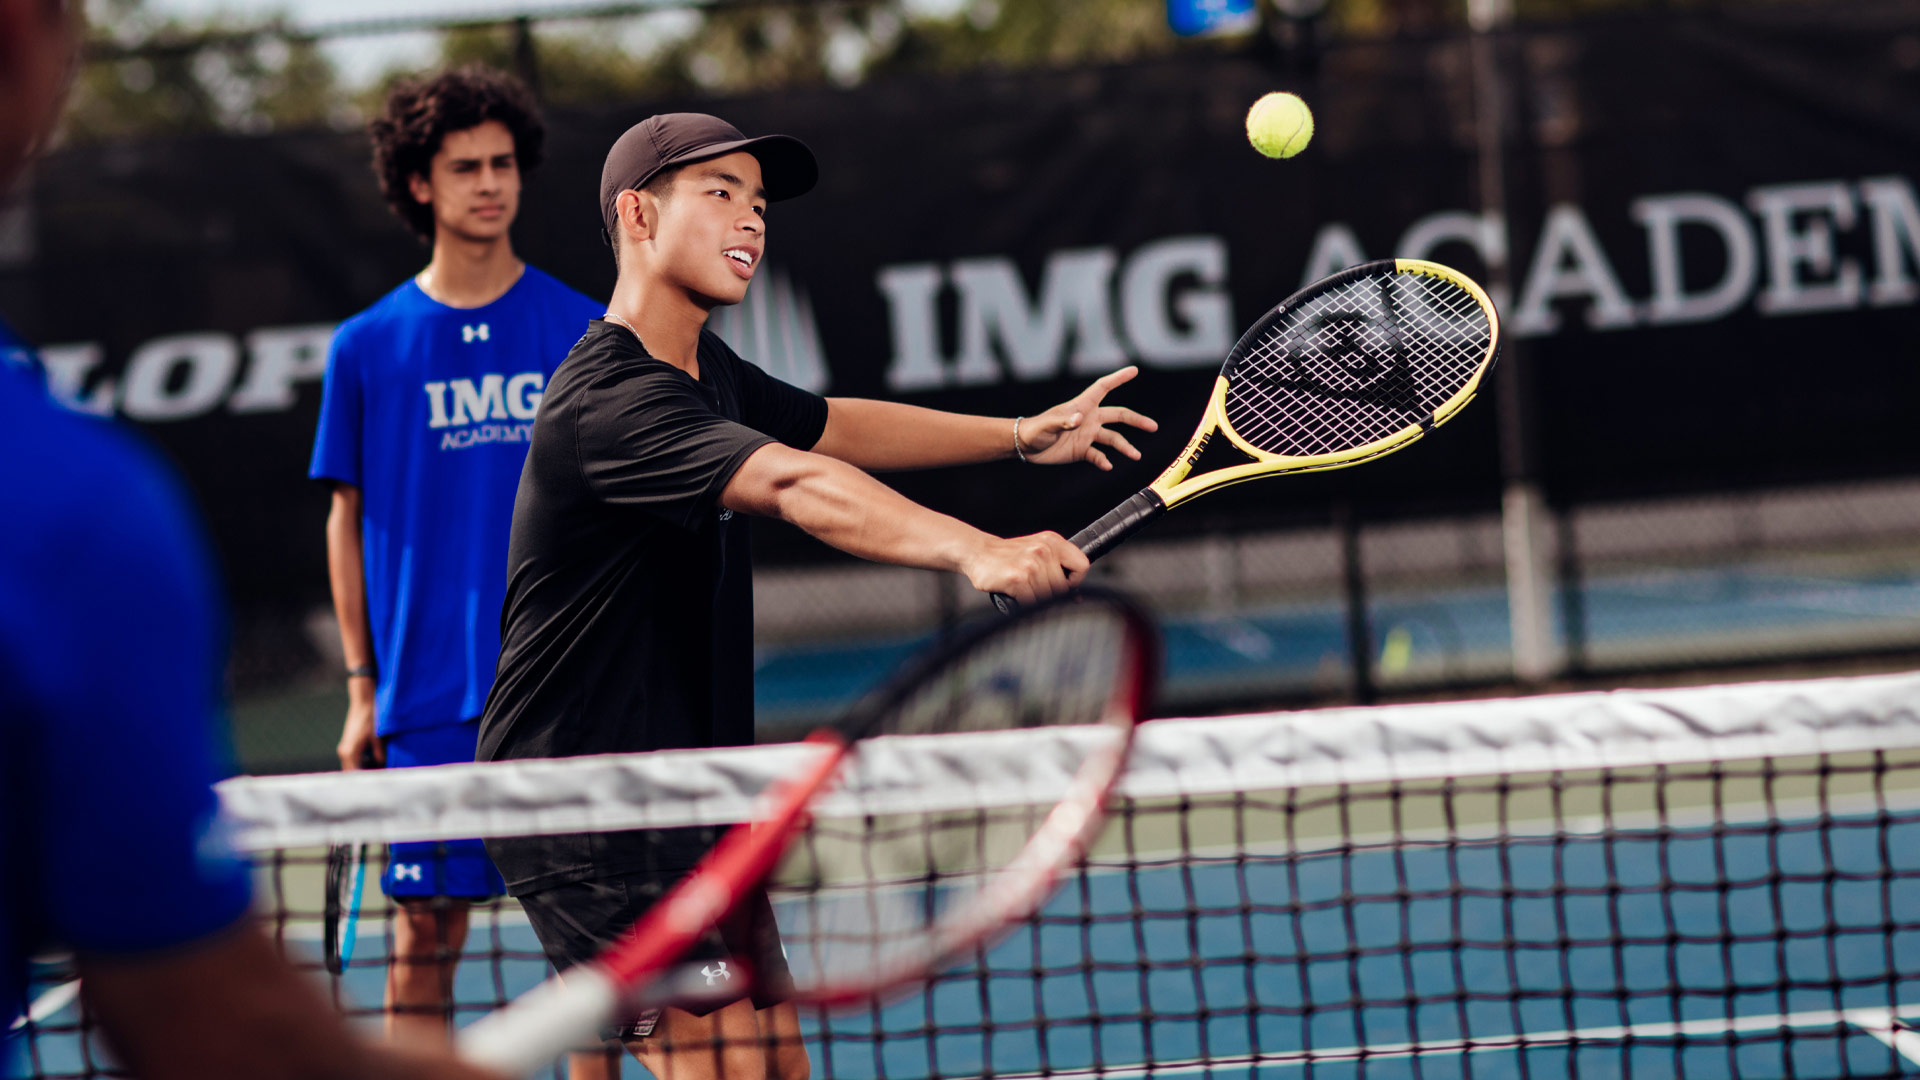 Tennis Camps - Tennis Camp | IMG Academy